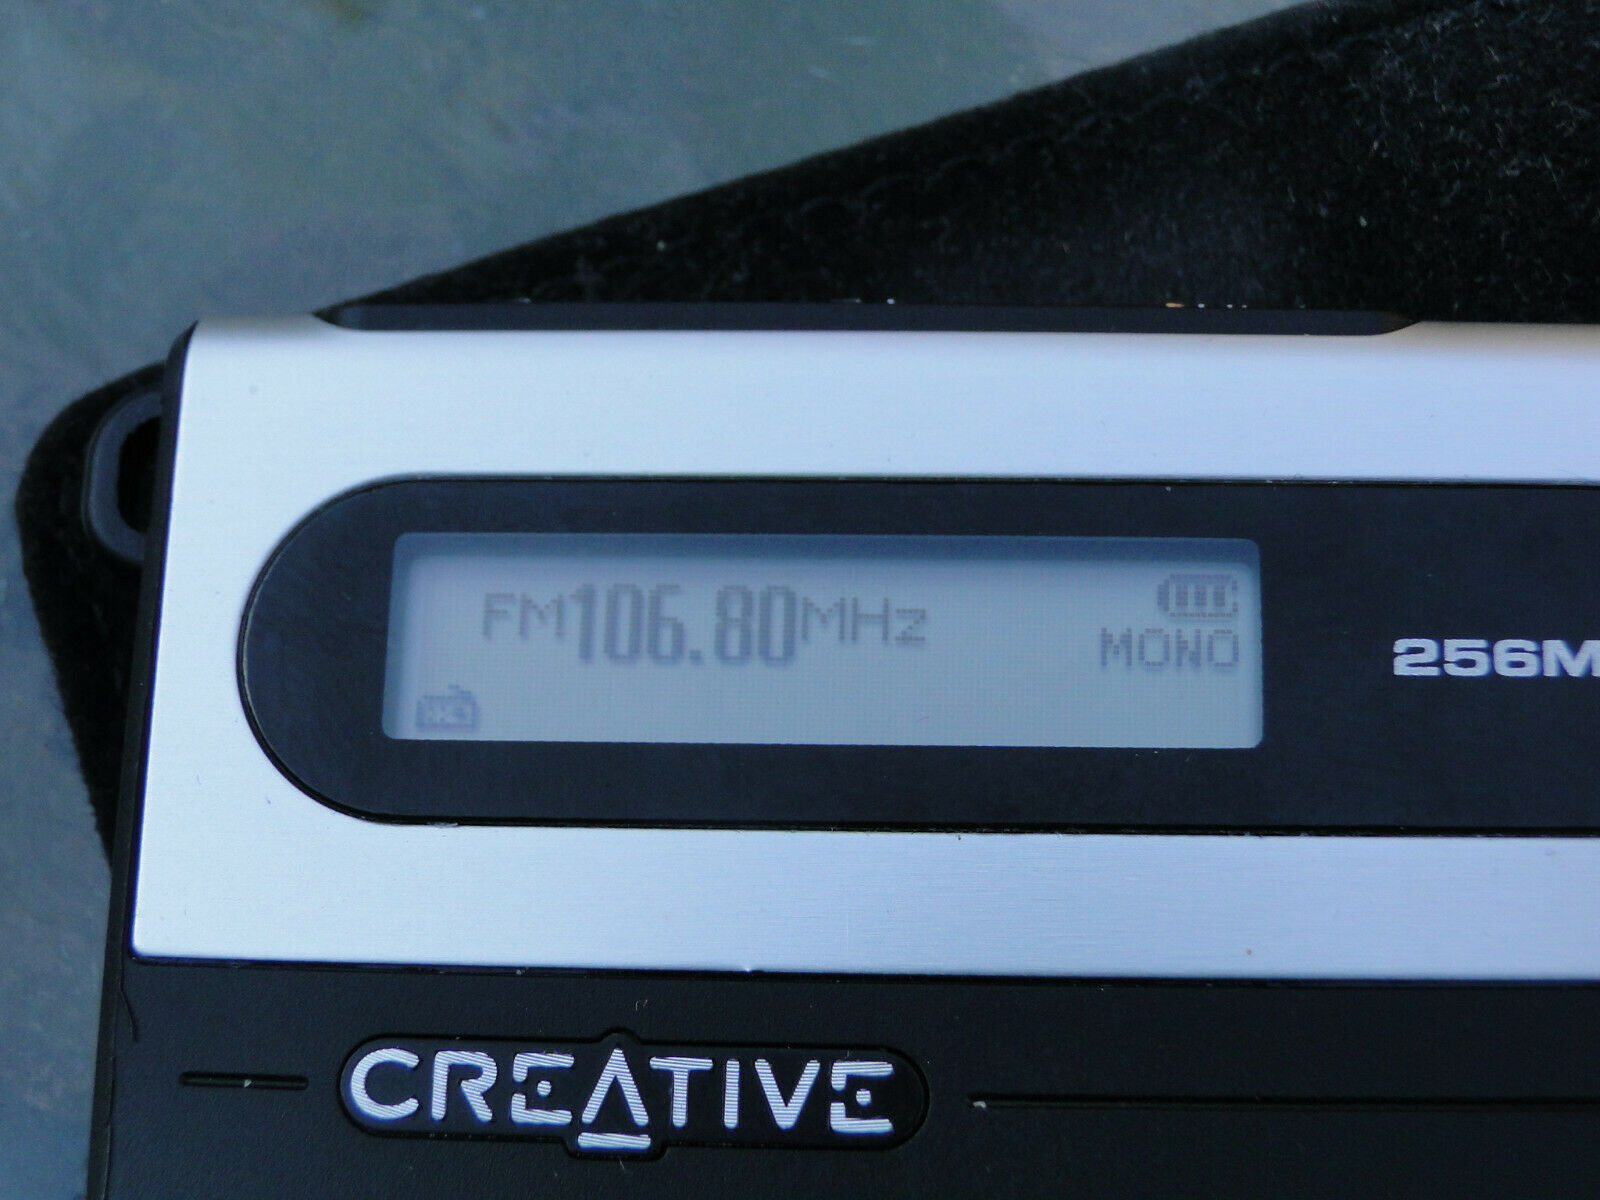 Rare Creative Muvo Slim 256MB MP3 Fm Player and 50 similar items